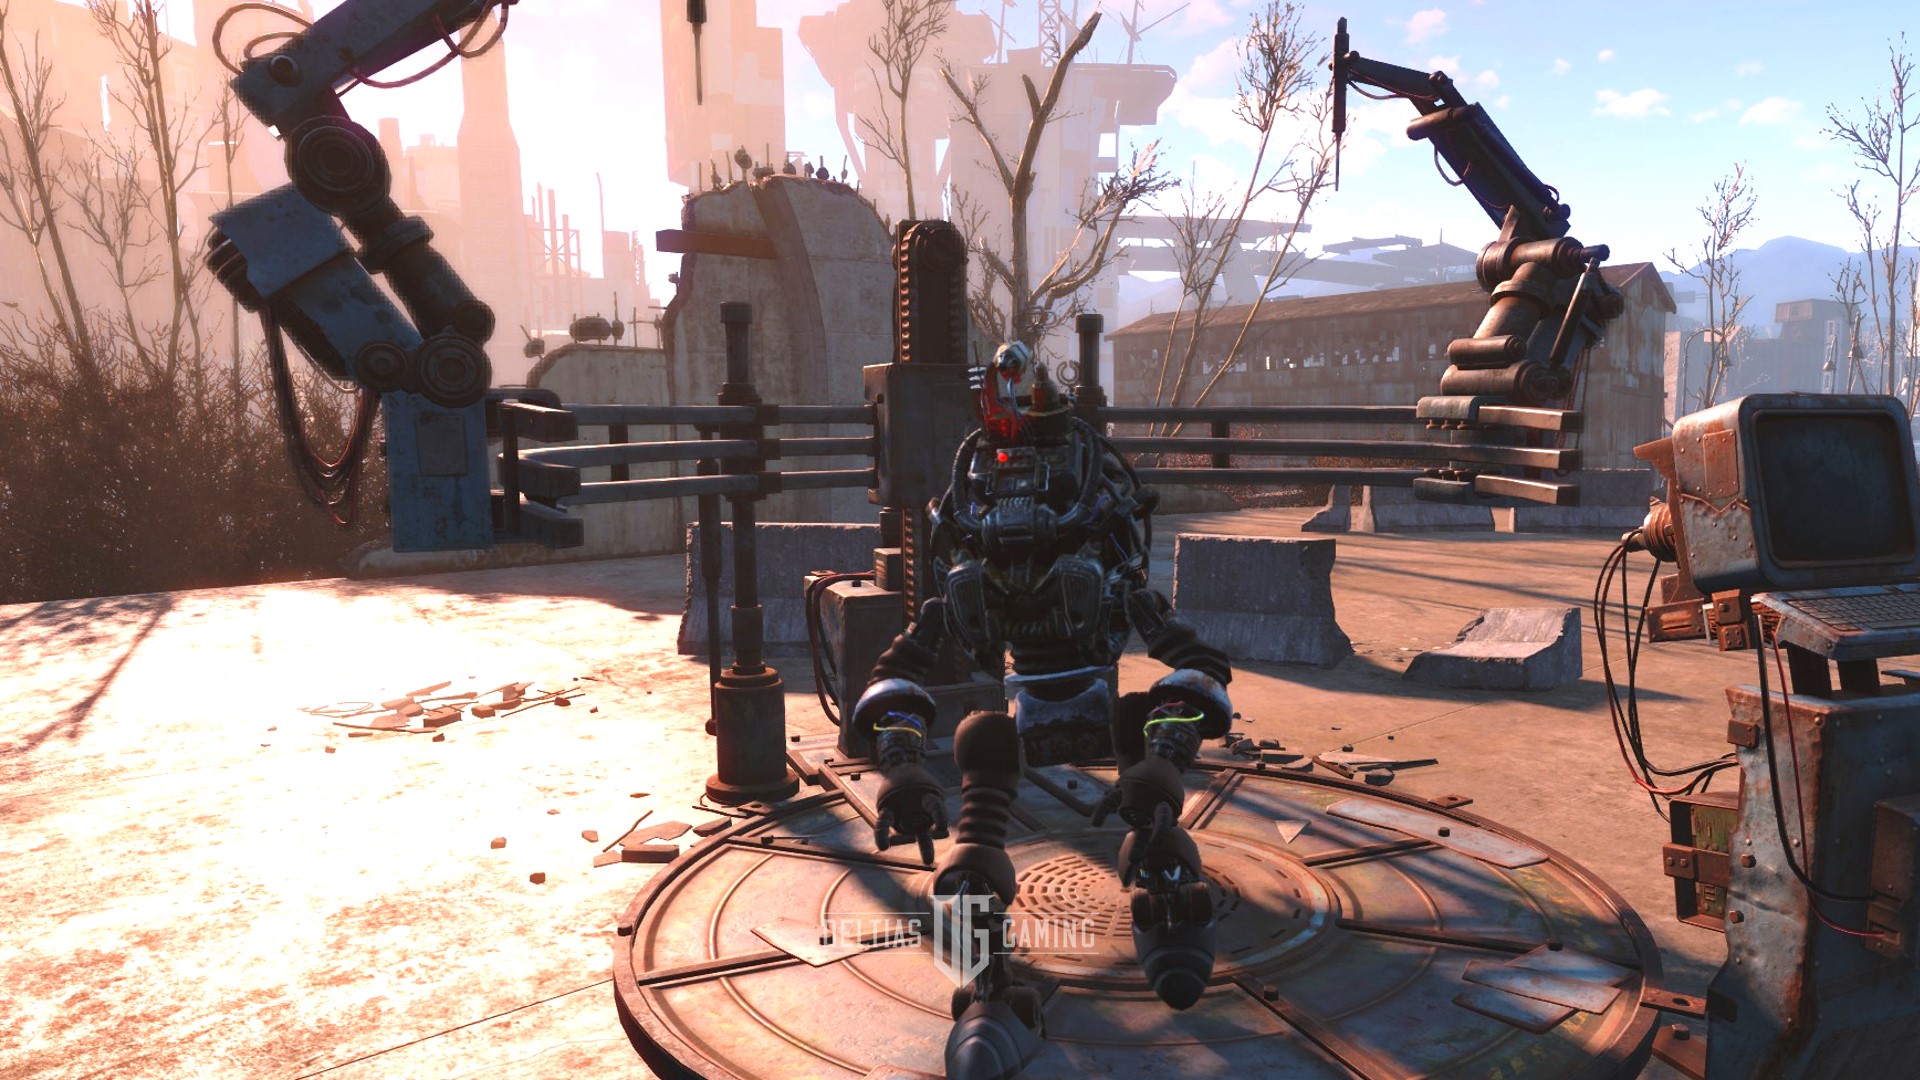 Automatron Fallout 4